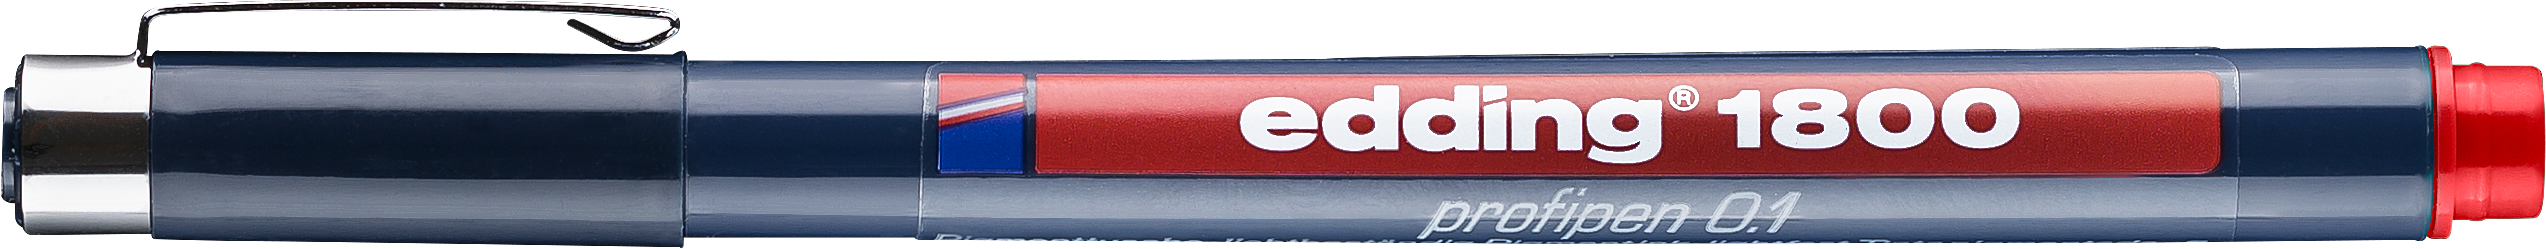 EDDING Profipen 1800 0.10-0.25mm 1800-2-01 rouge rouge